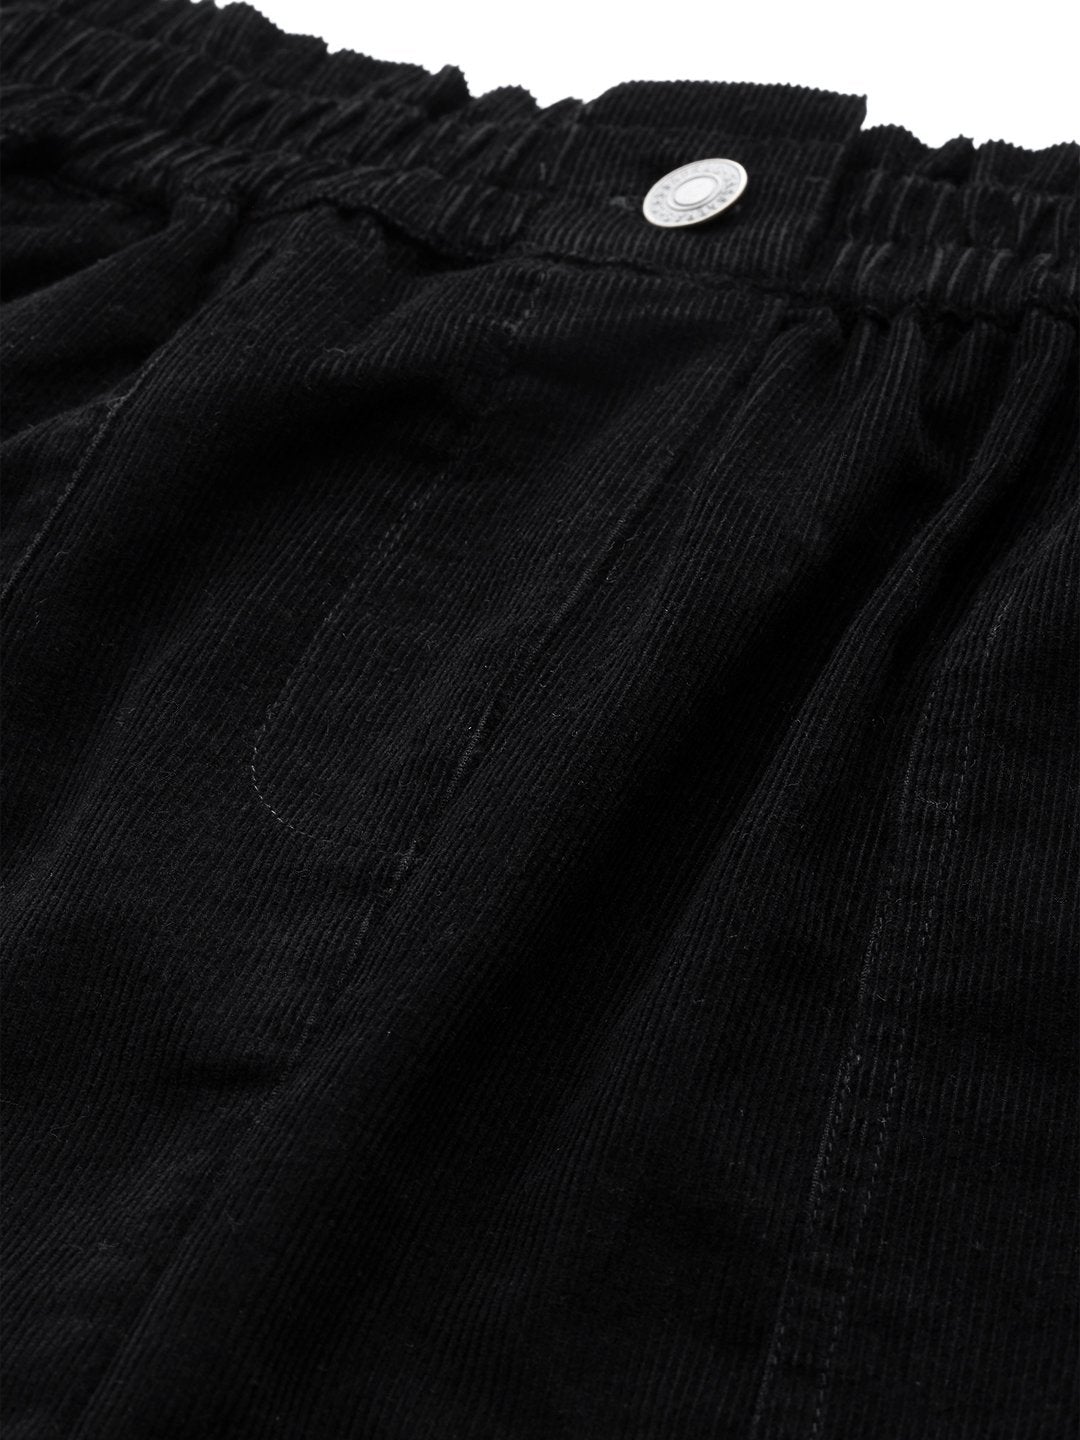 Women's Black Corduroy Paperbag Waist Mini Skirt - SASSAFRAS